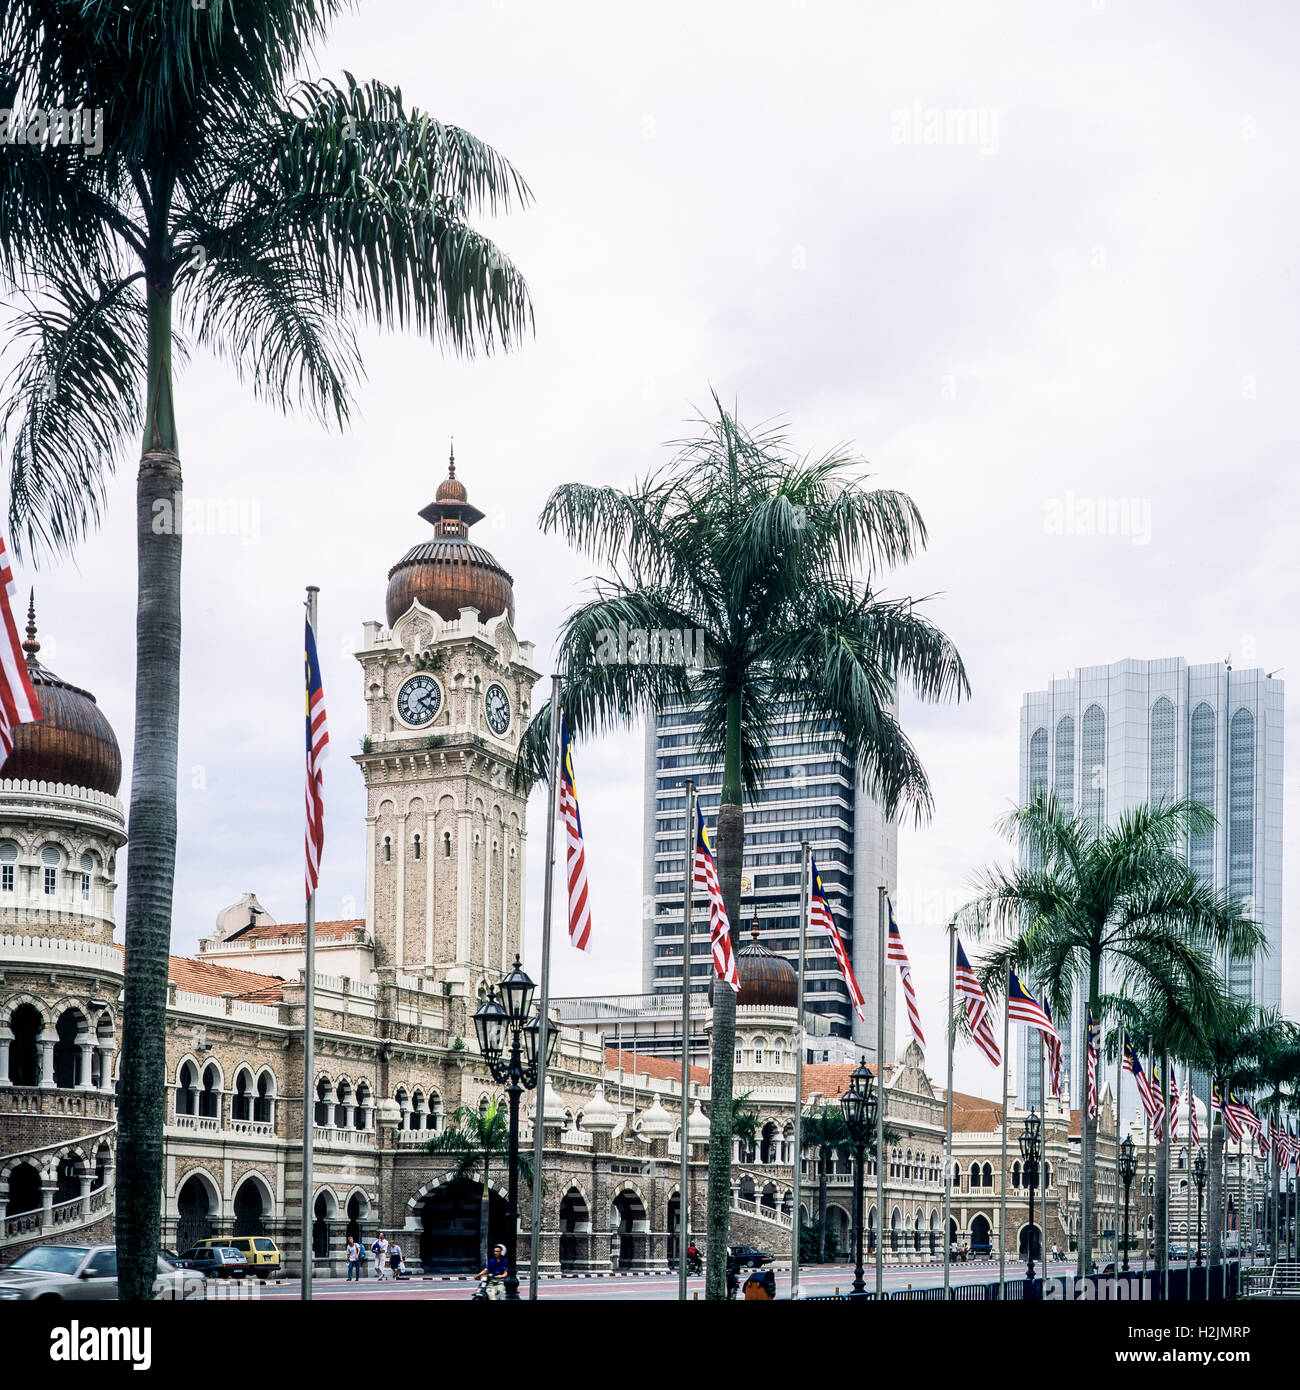 Sultan Abdul Samad building and skyscrapers, Dataran Merdeka square, Kuala Lumpur, Malaysia Stock Photo